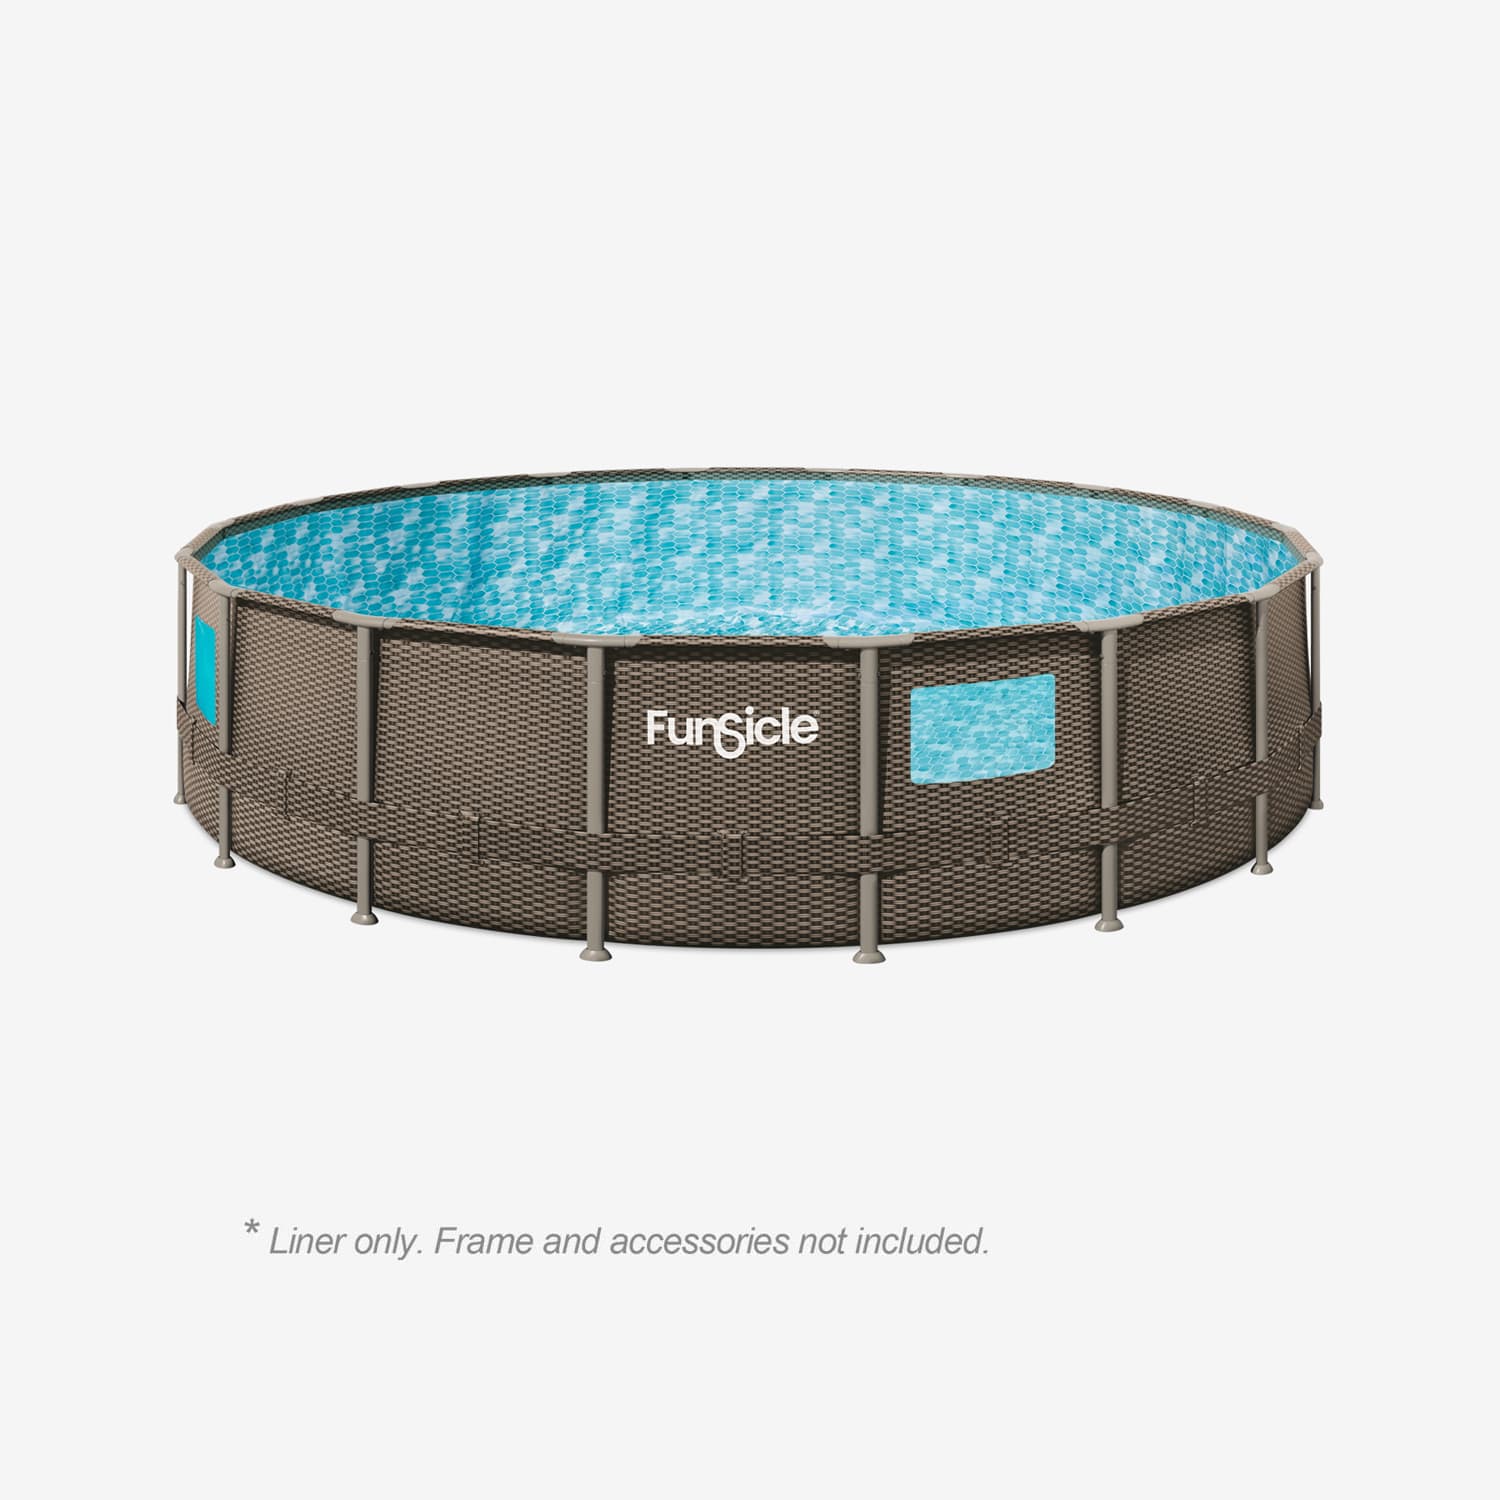 Funsicle 22 ft Crystal Vue Oasis Designer Pool Liner – Dark Double Rattan